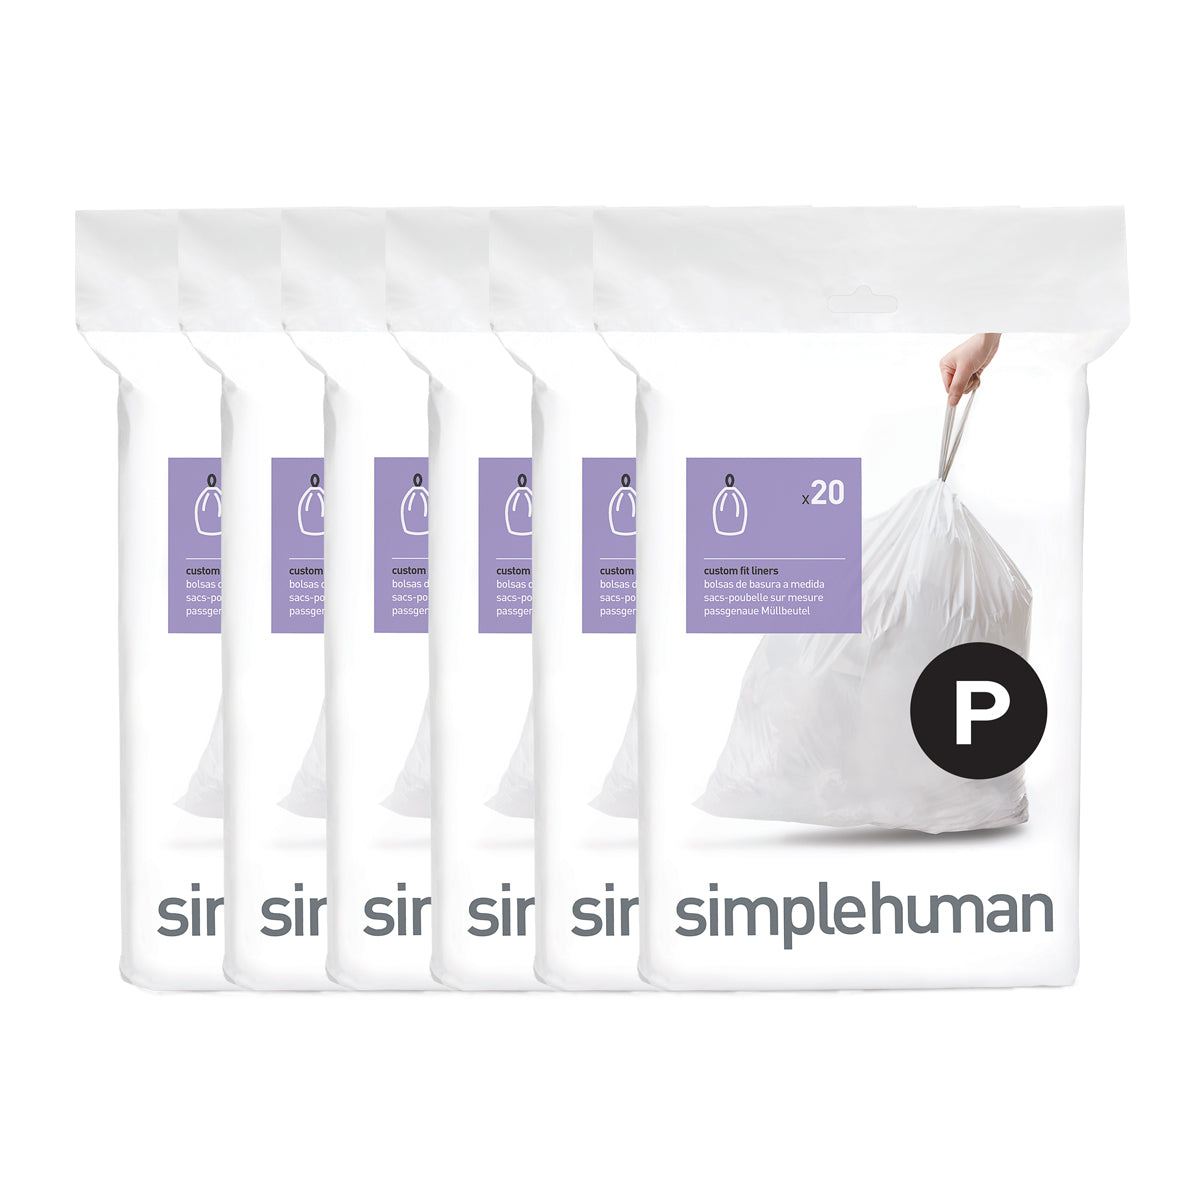 simplehuman Code P 50-60 Liter / 13-16 Gallon Custom Fit Drawstring Trash Bags 100 Pack White